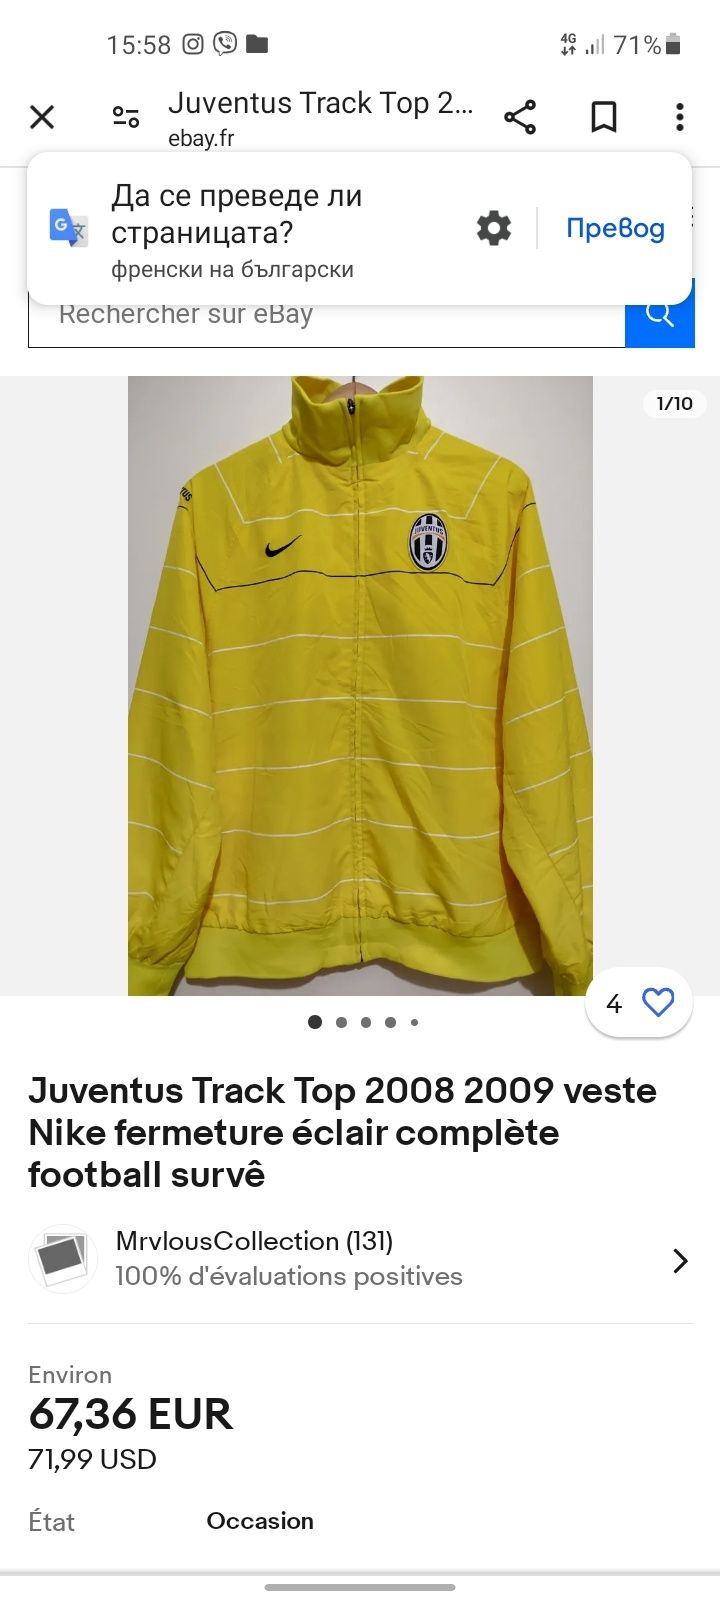 Nike Juventus мъжко горнище L размер.